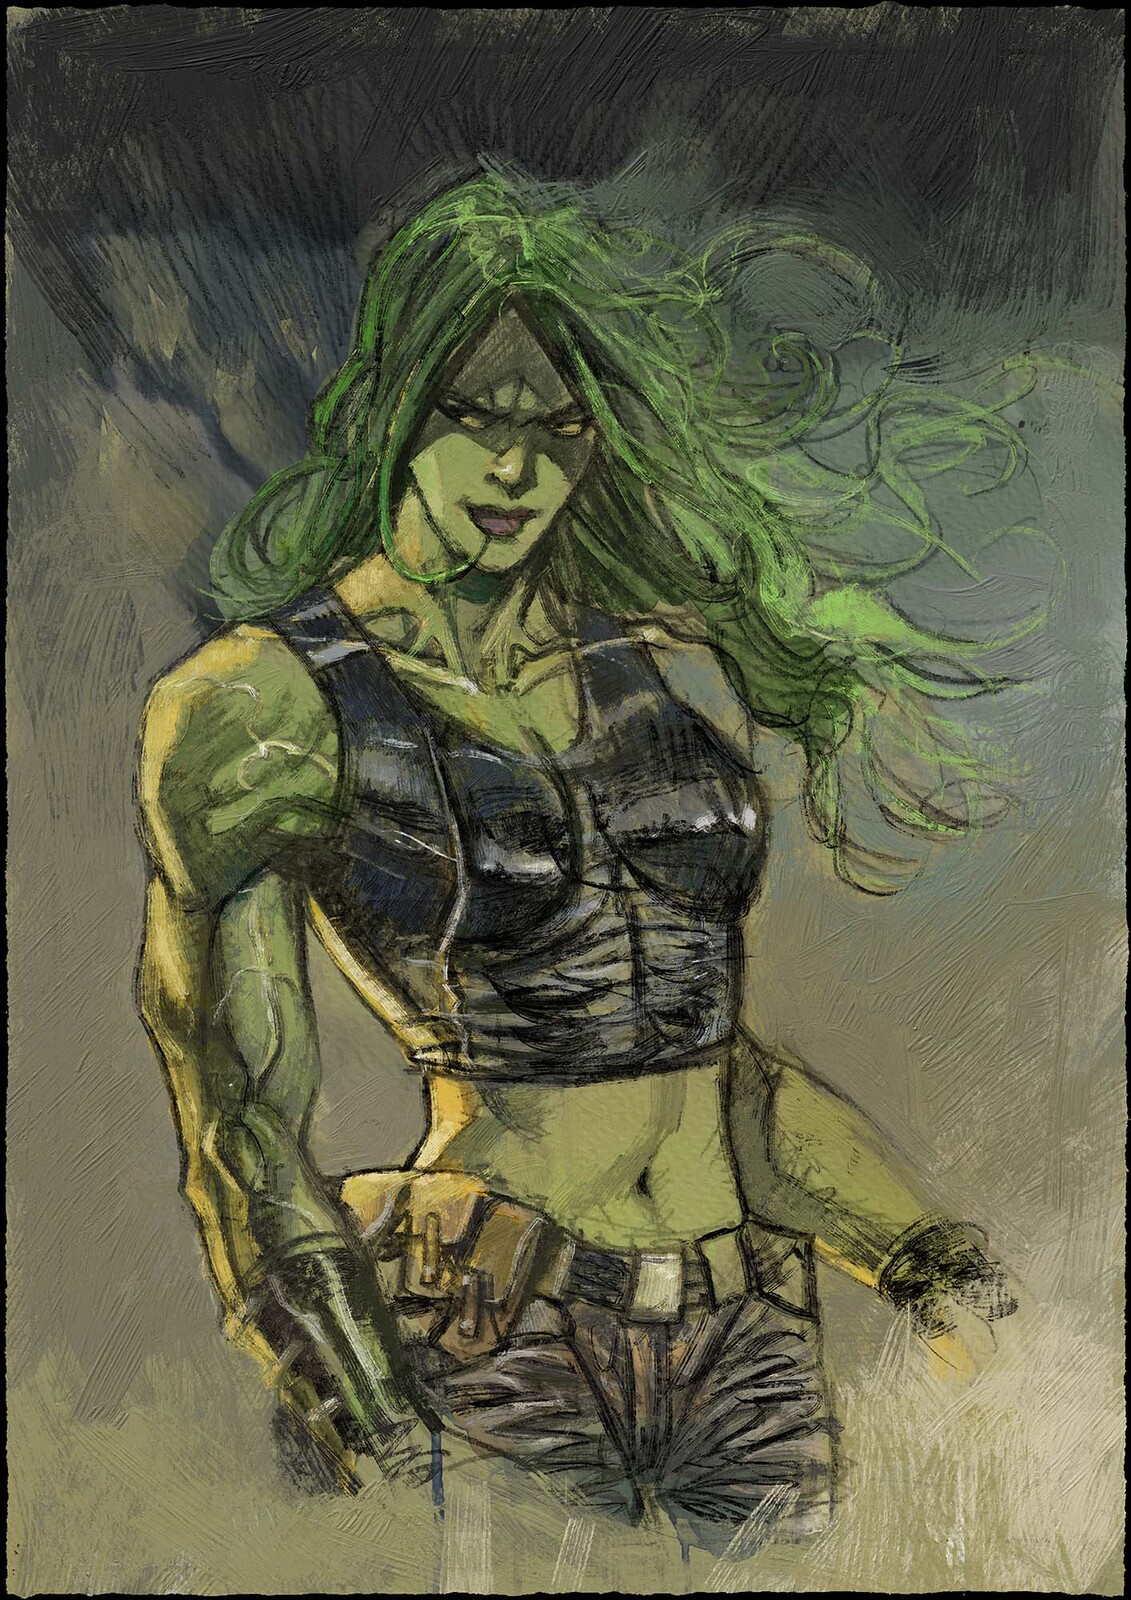 She Hulk portrait